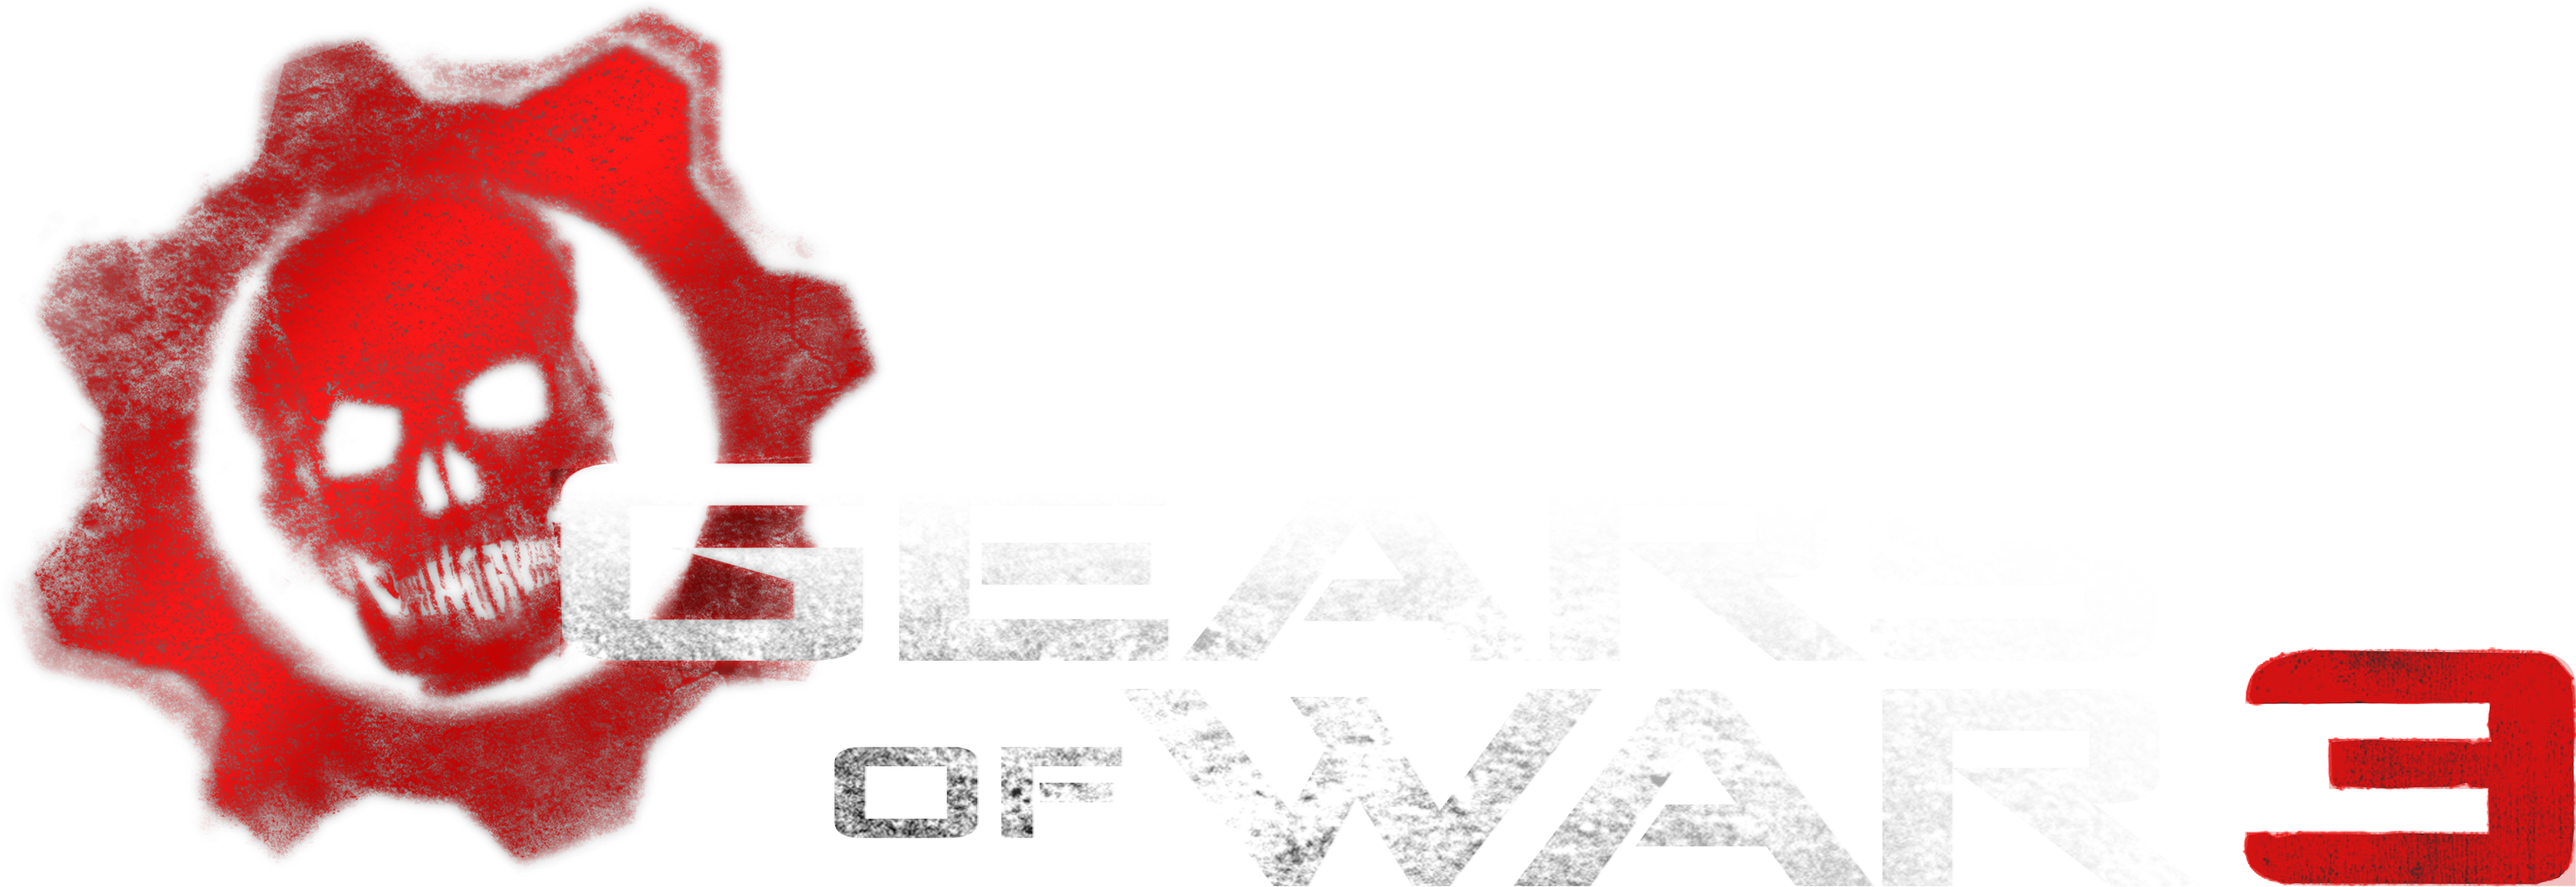 Gears of War 3 - SteamGridDB